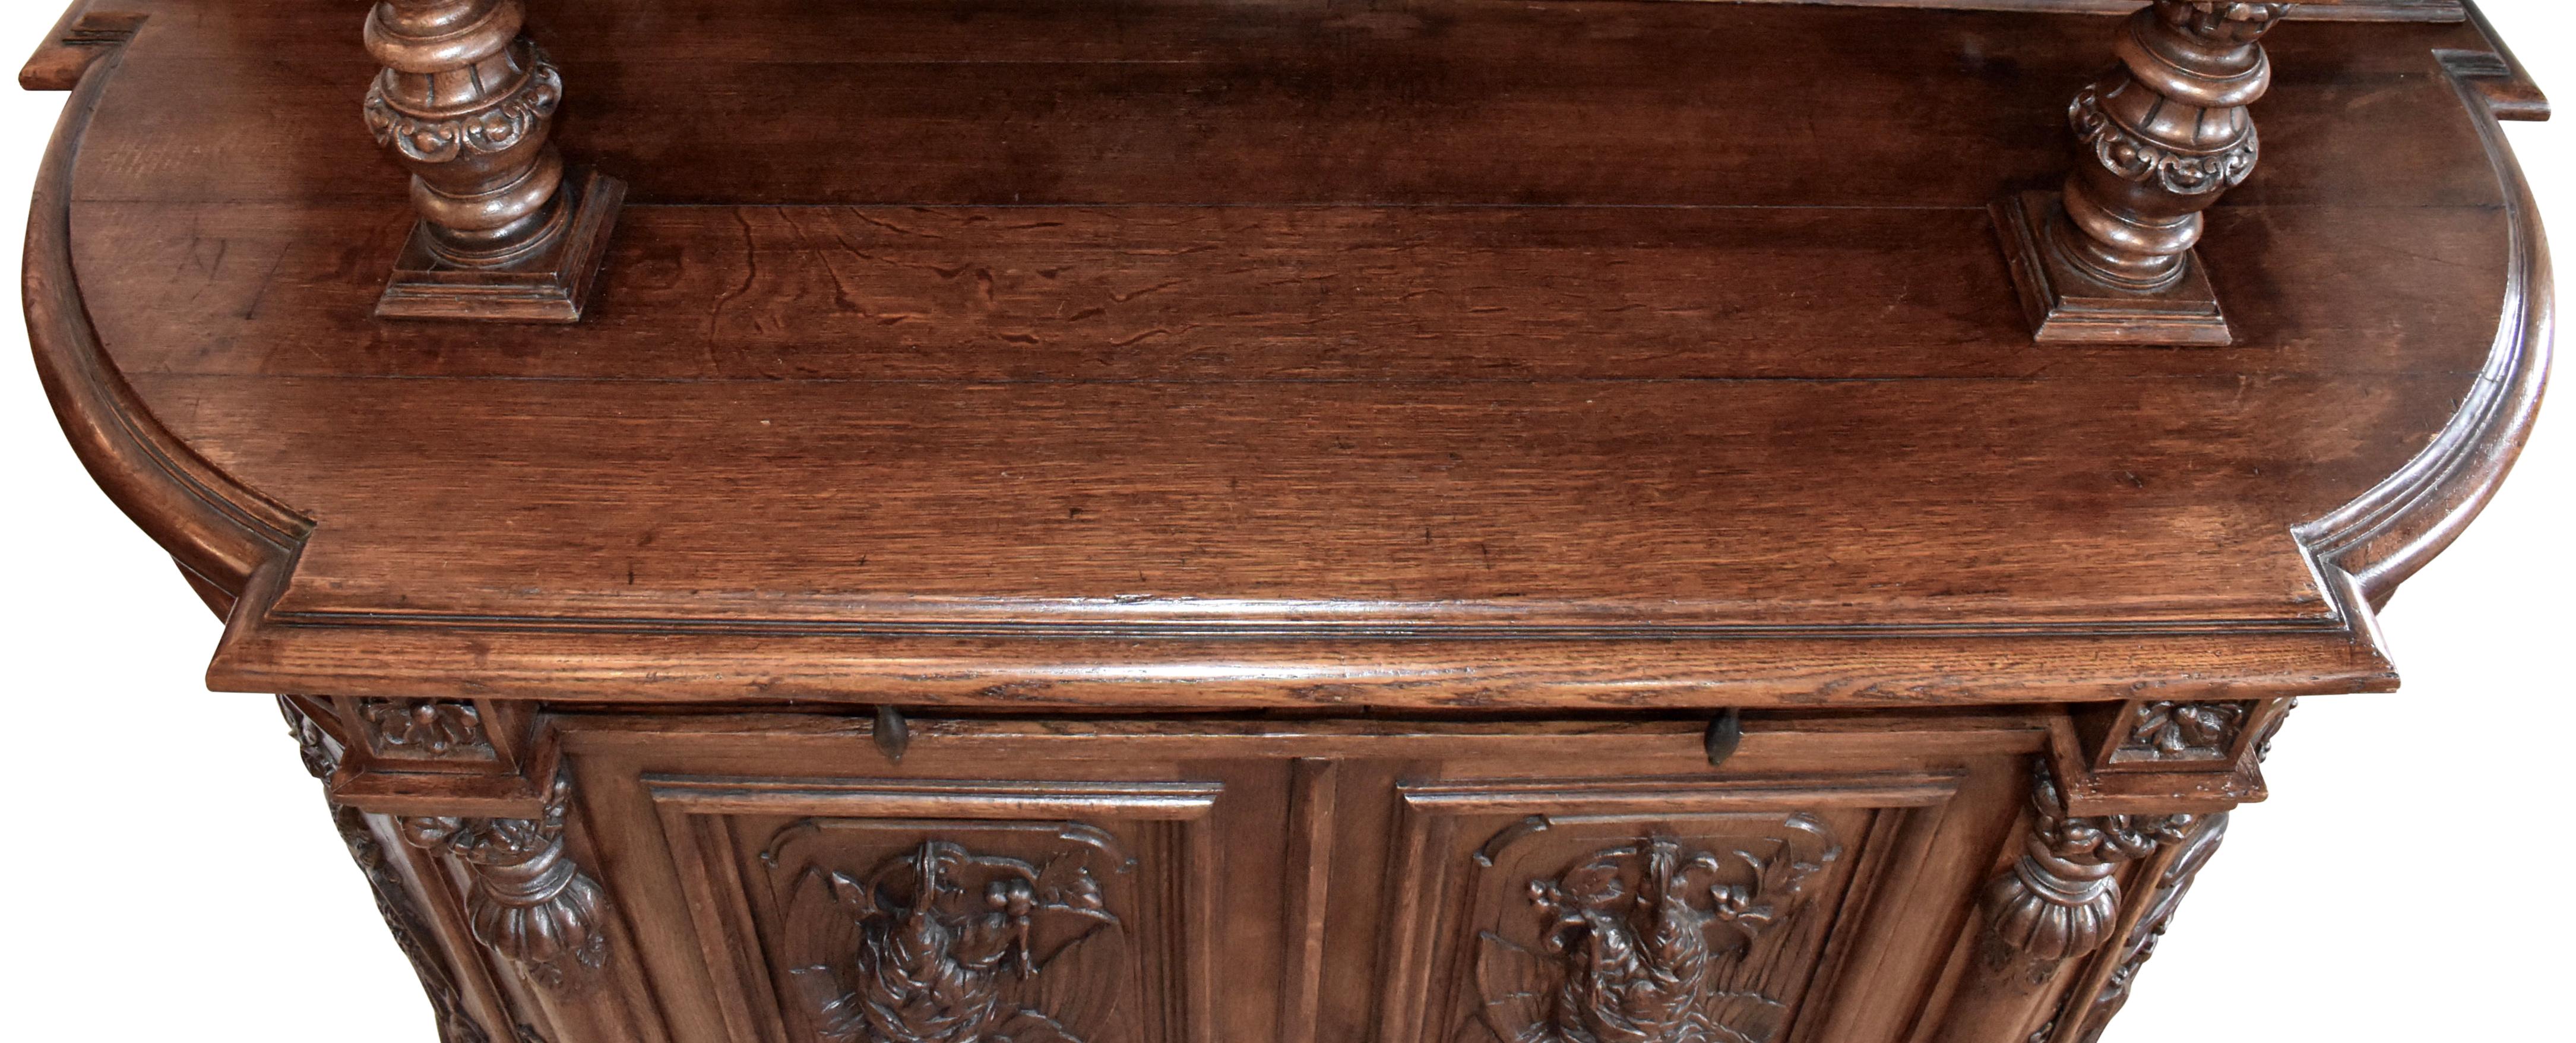 French Renaissance Revival Carved Hunt Cabinet For Sale 3